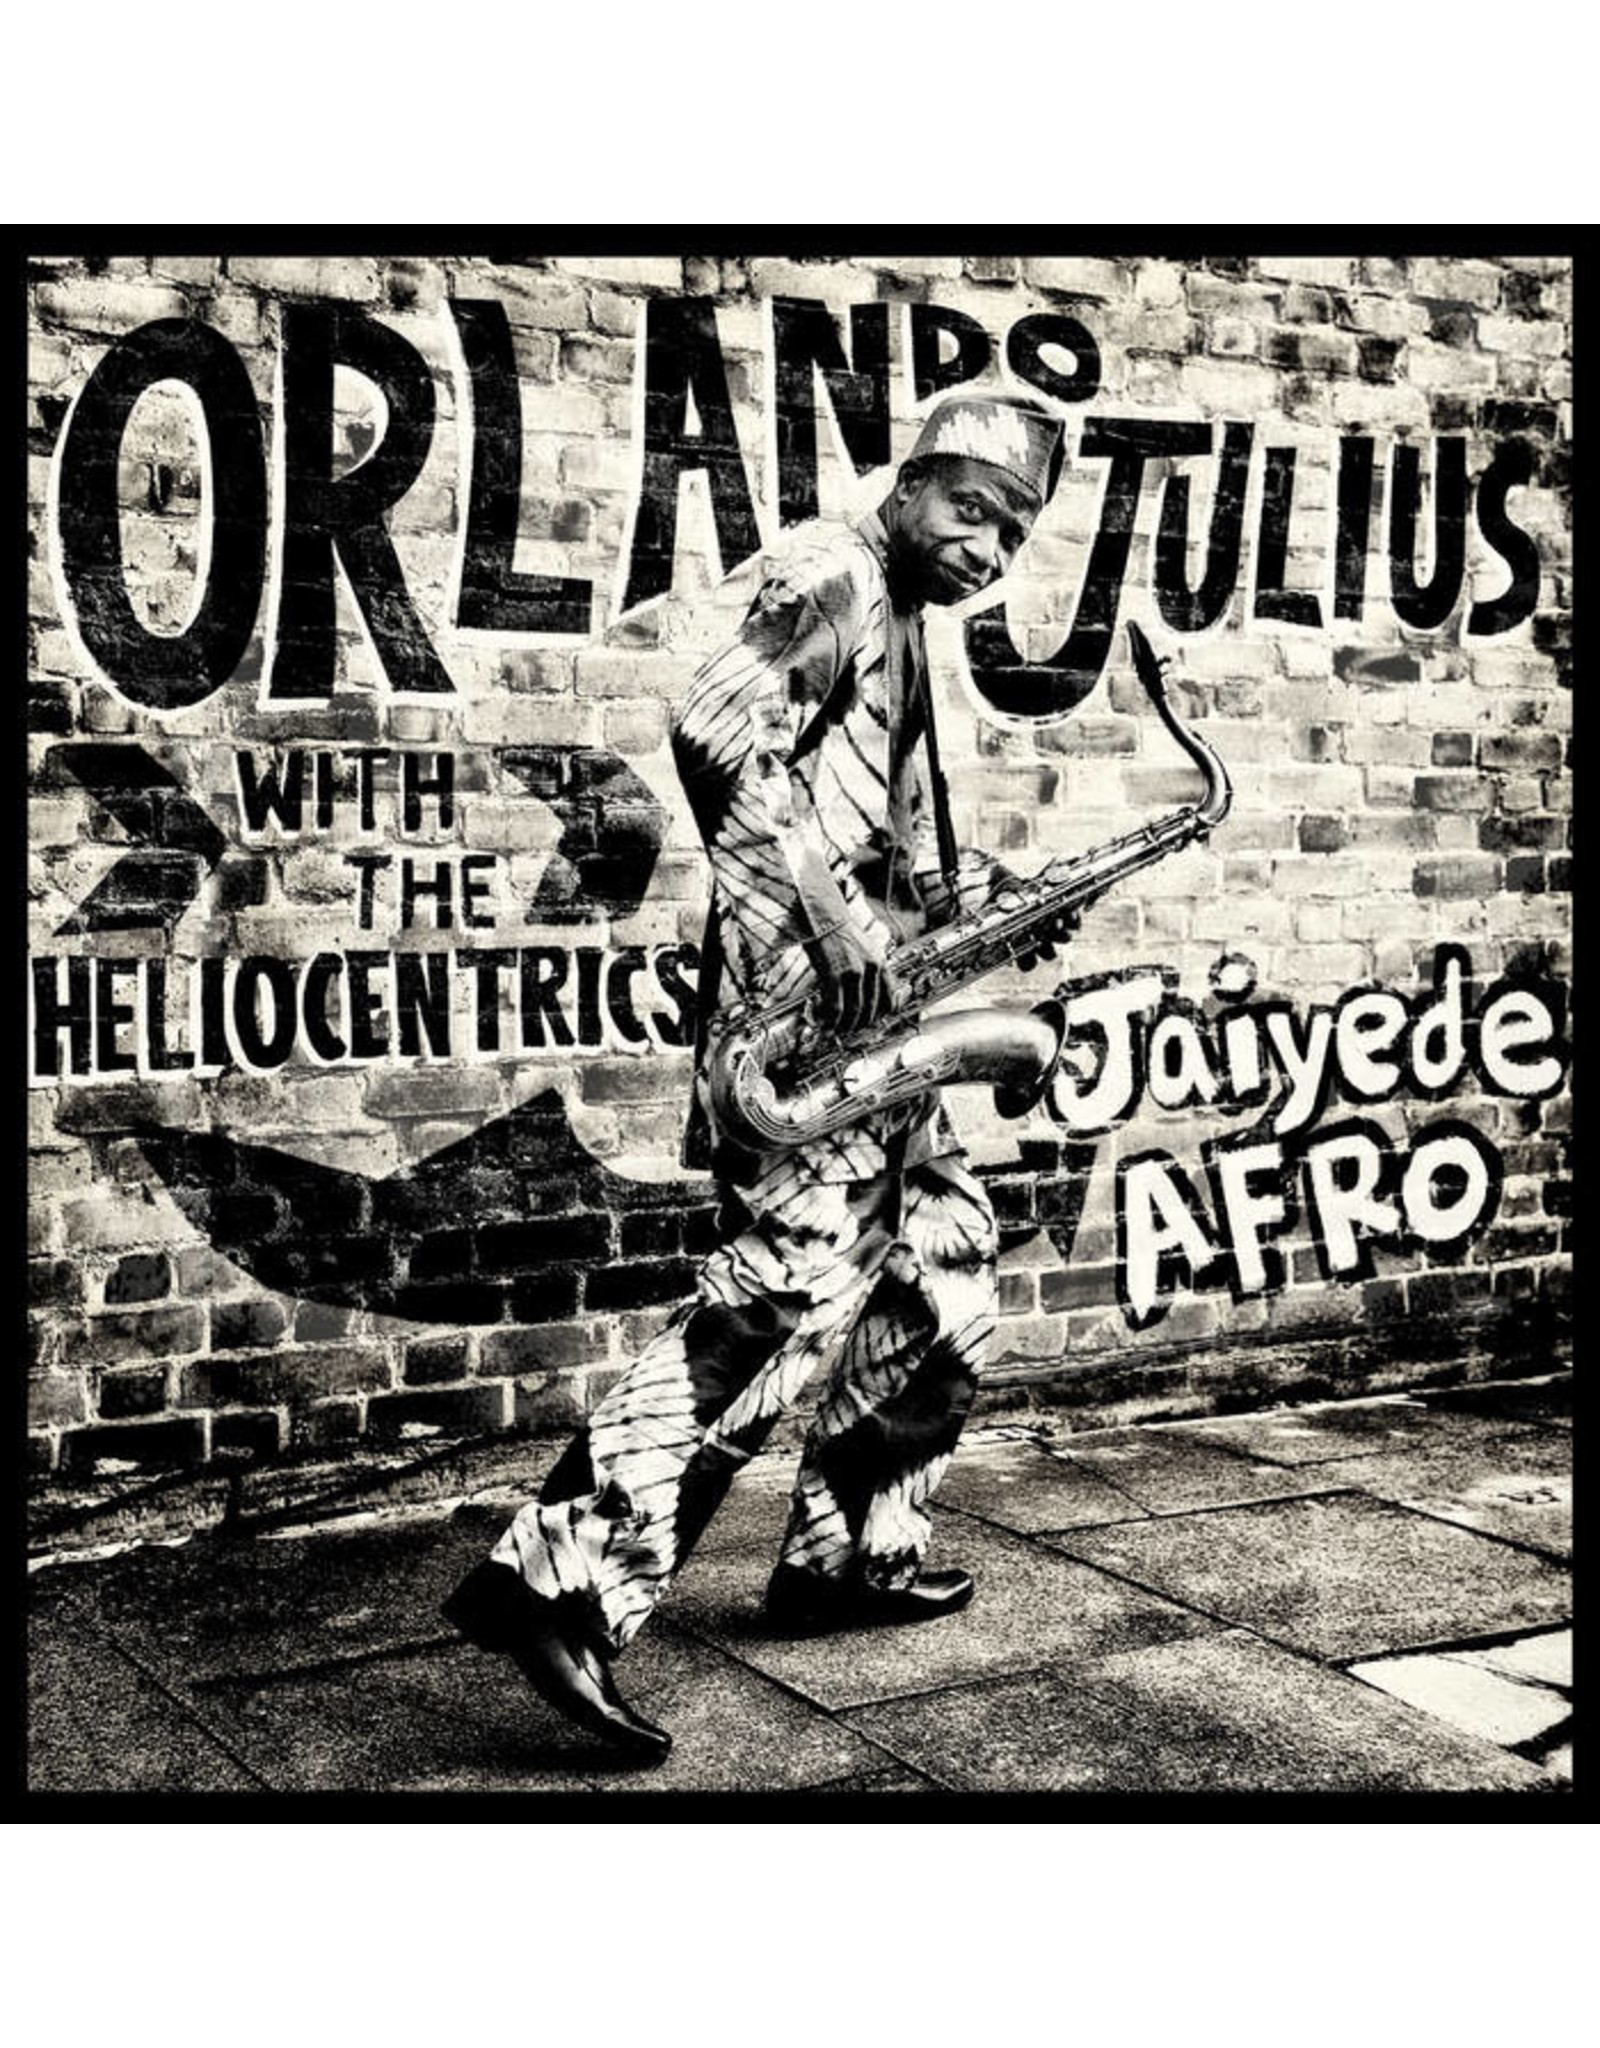 Strut Julius, Orlando & The Heliocentrics: Jaiyede Afro (TRANSPARENT) LP